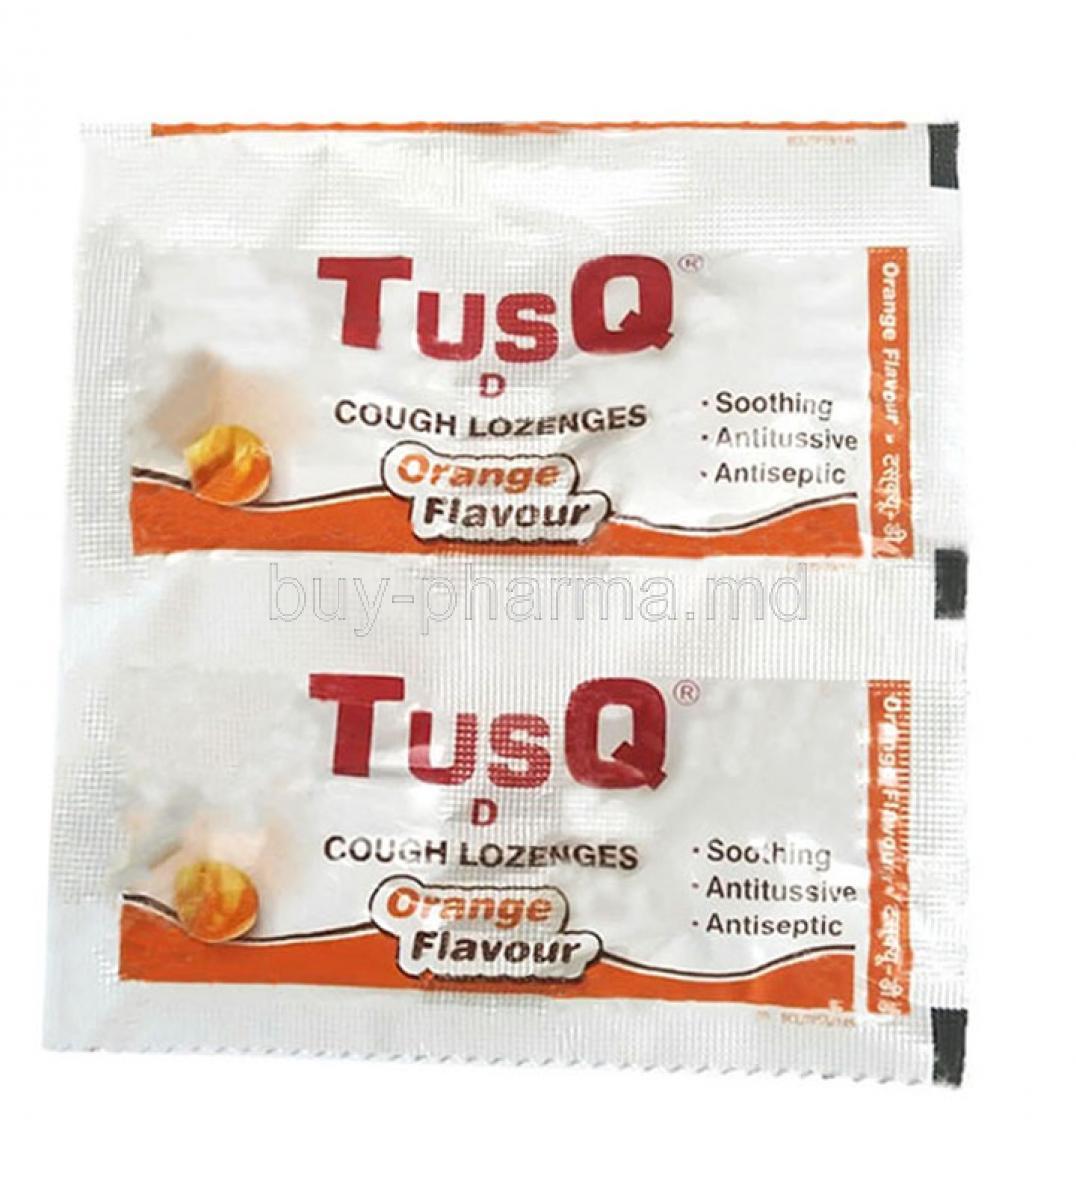 Tusq D Cough Lozenges Orange,Amylmetacresol 0.6mg and Dextromethorphan Hydrobromide 5mg, lozenges,Blue Cross Laboratories Ltd, Sheet